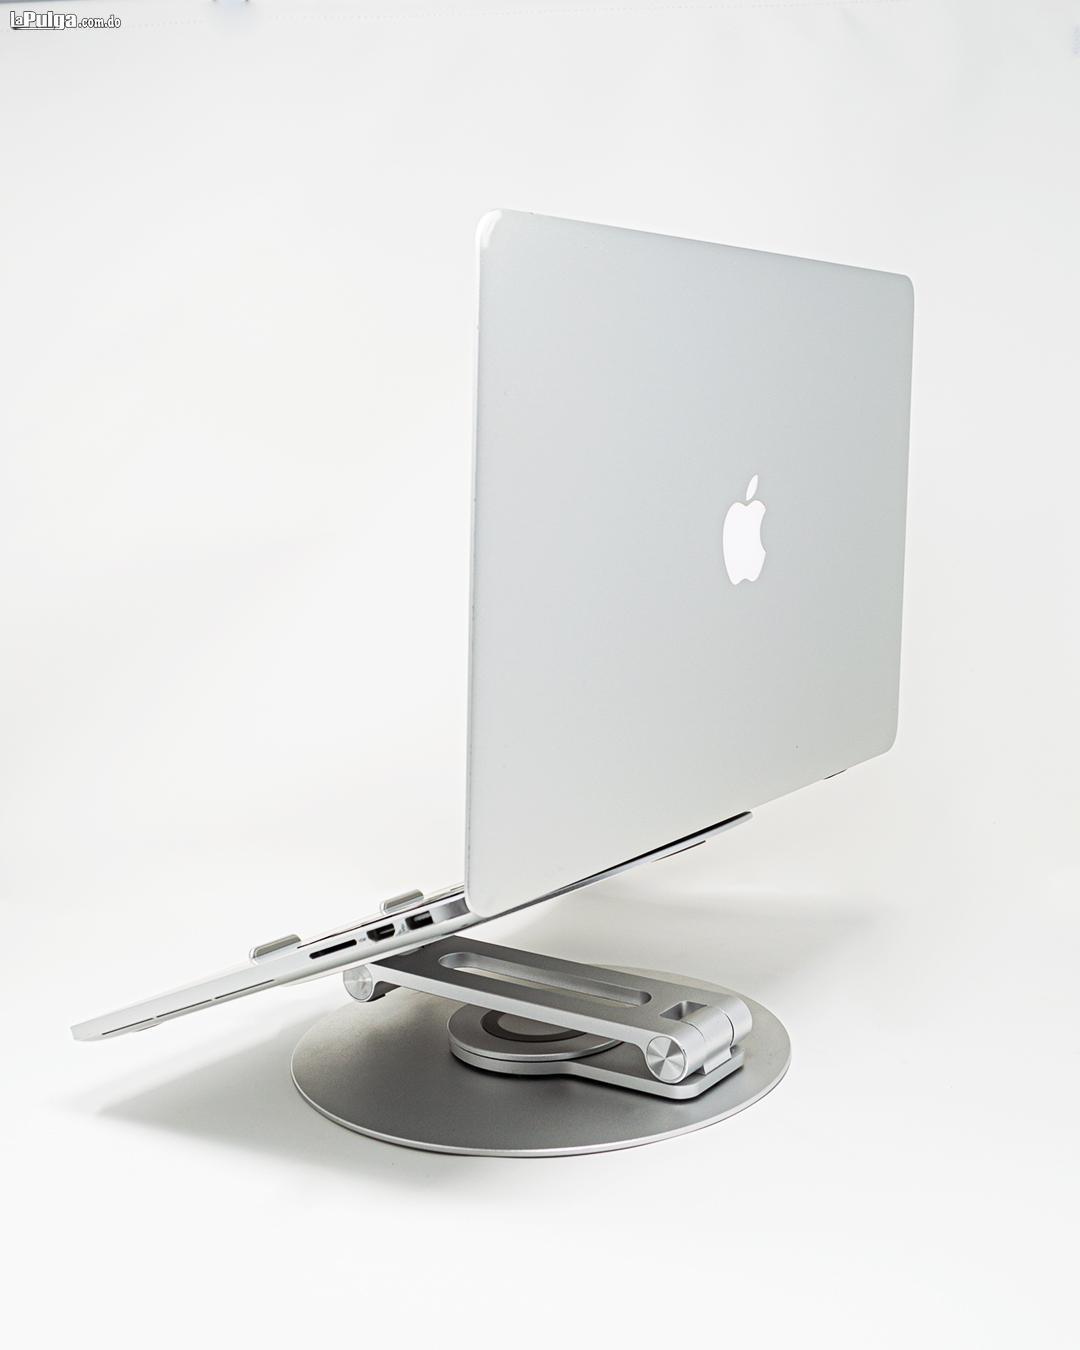 MacBook Pro 15 pulgs 2014 Doble Tarjeta Gráfica Foto 7130223-1.jpg